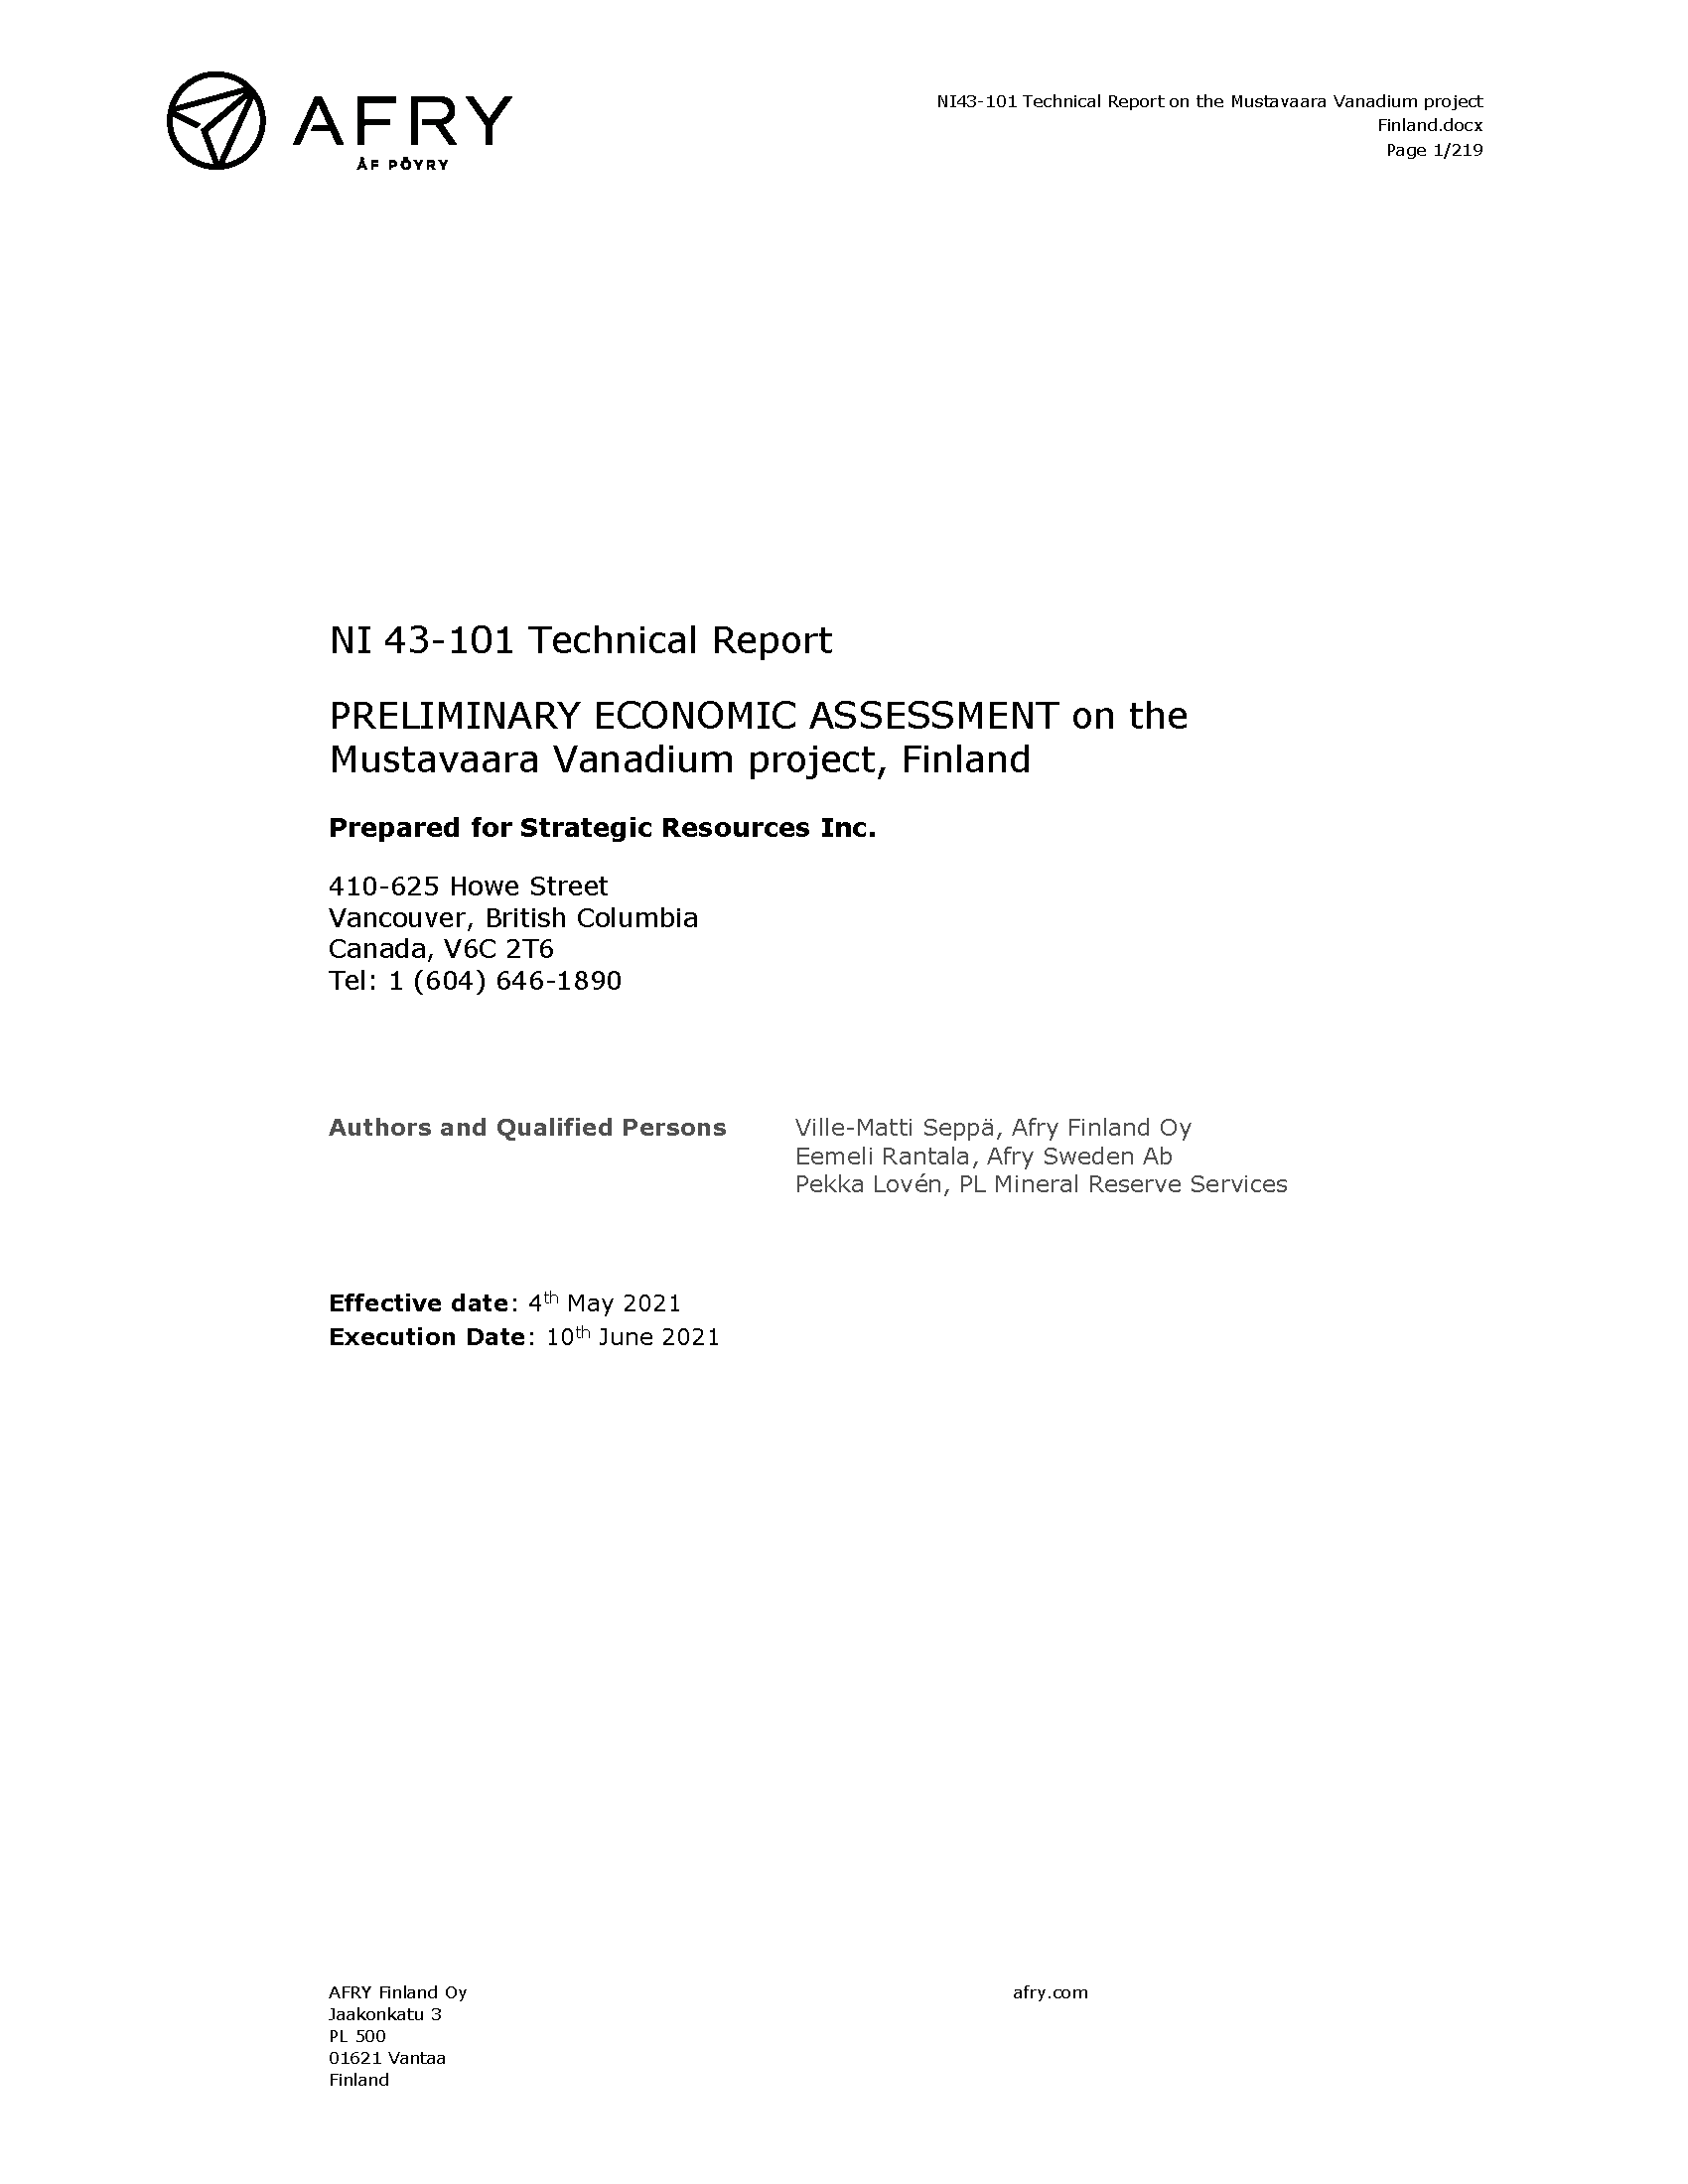 NI 43-101 Technical Report - PEA Mustavaara - May 2021